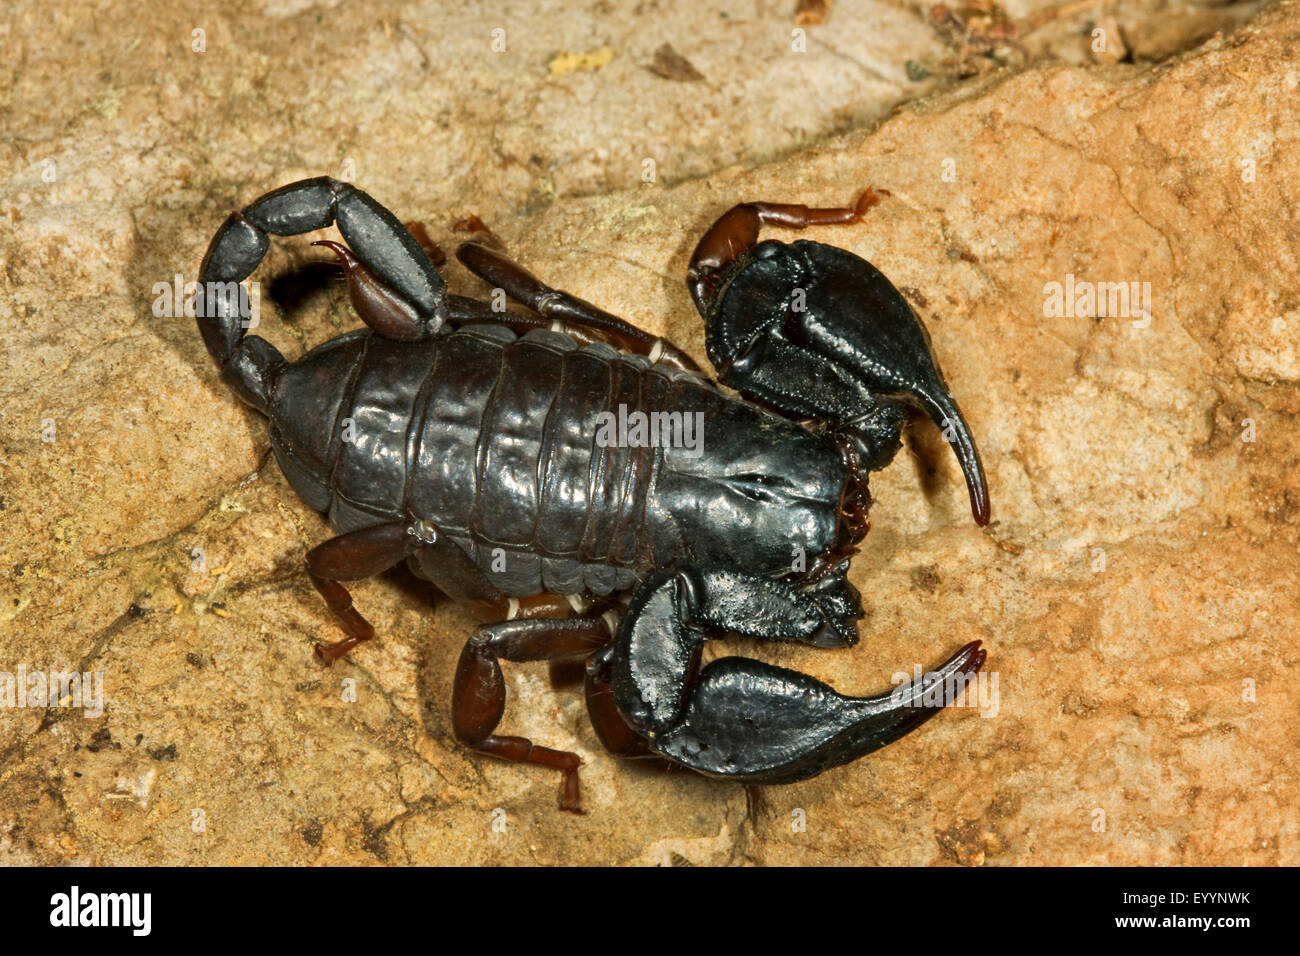 Italian scorpion (Euscorpius italicus), on a stone, Italy Stock Photo